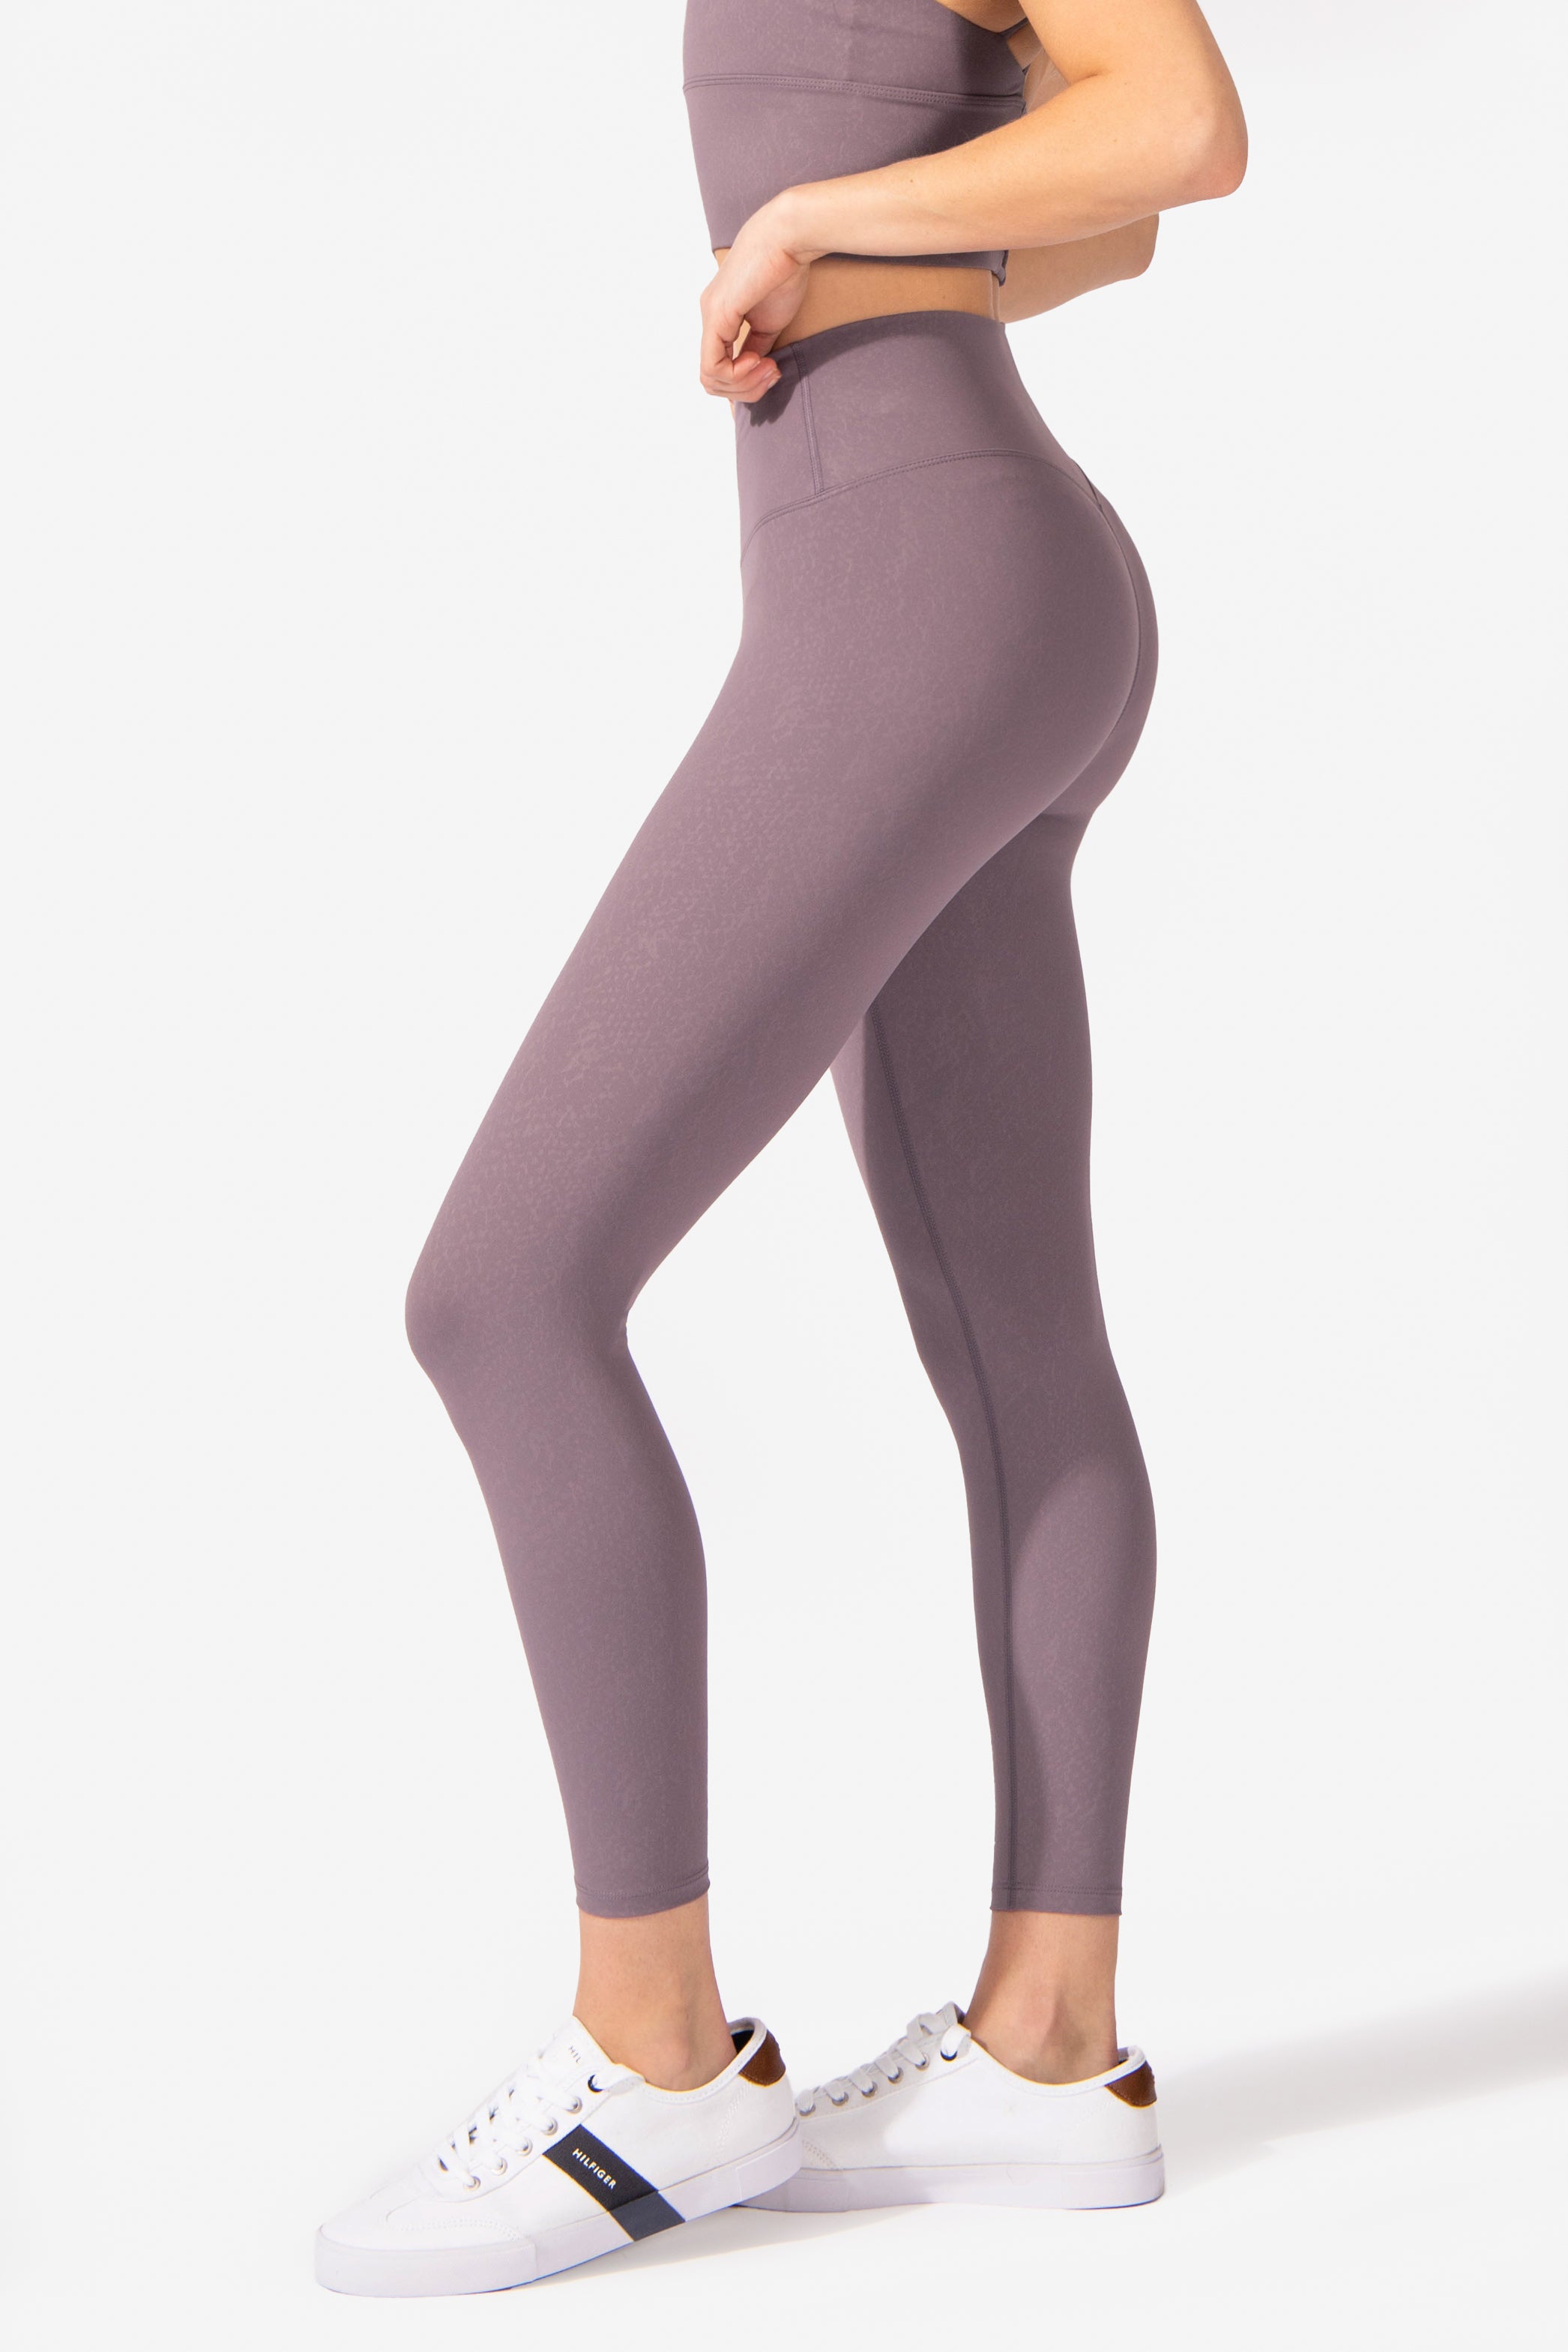 EMILIO PUCCI Trousers Black Lace effect snakeskin gym leggings. Size XS / S  | eBay